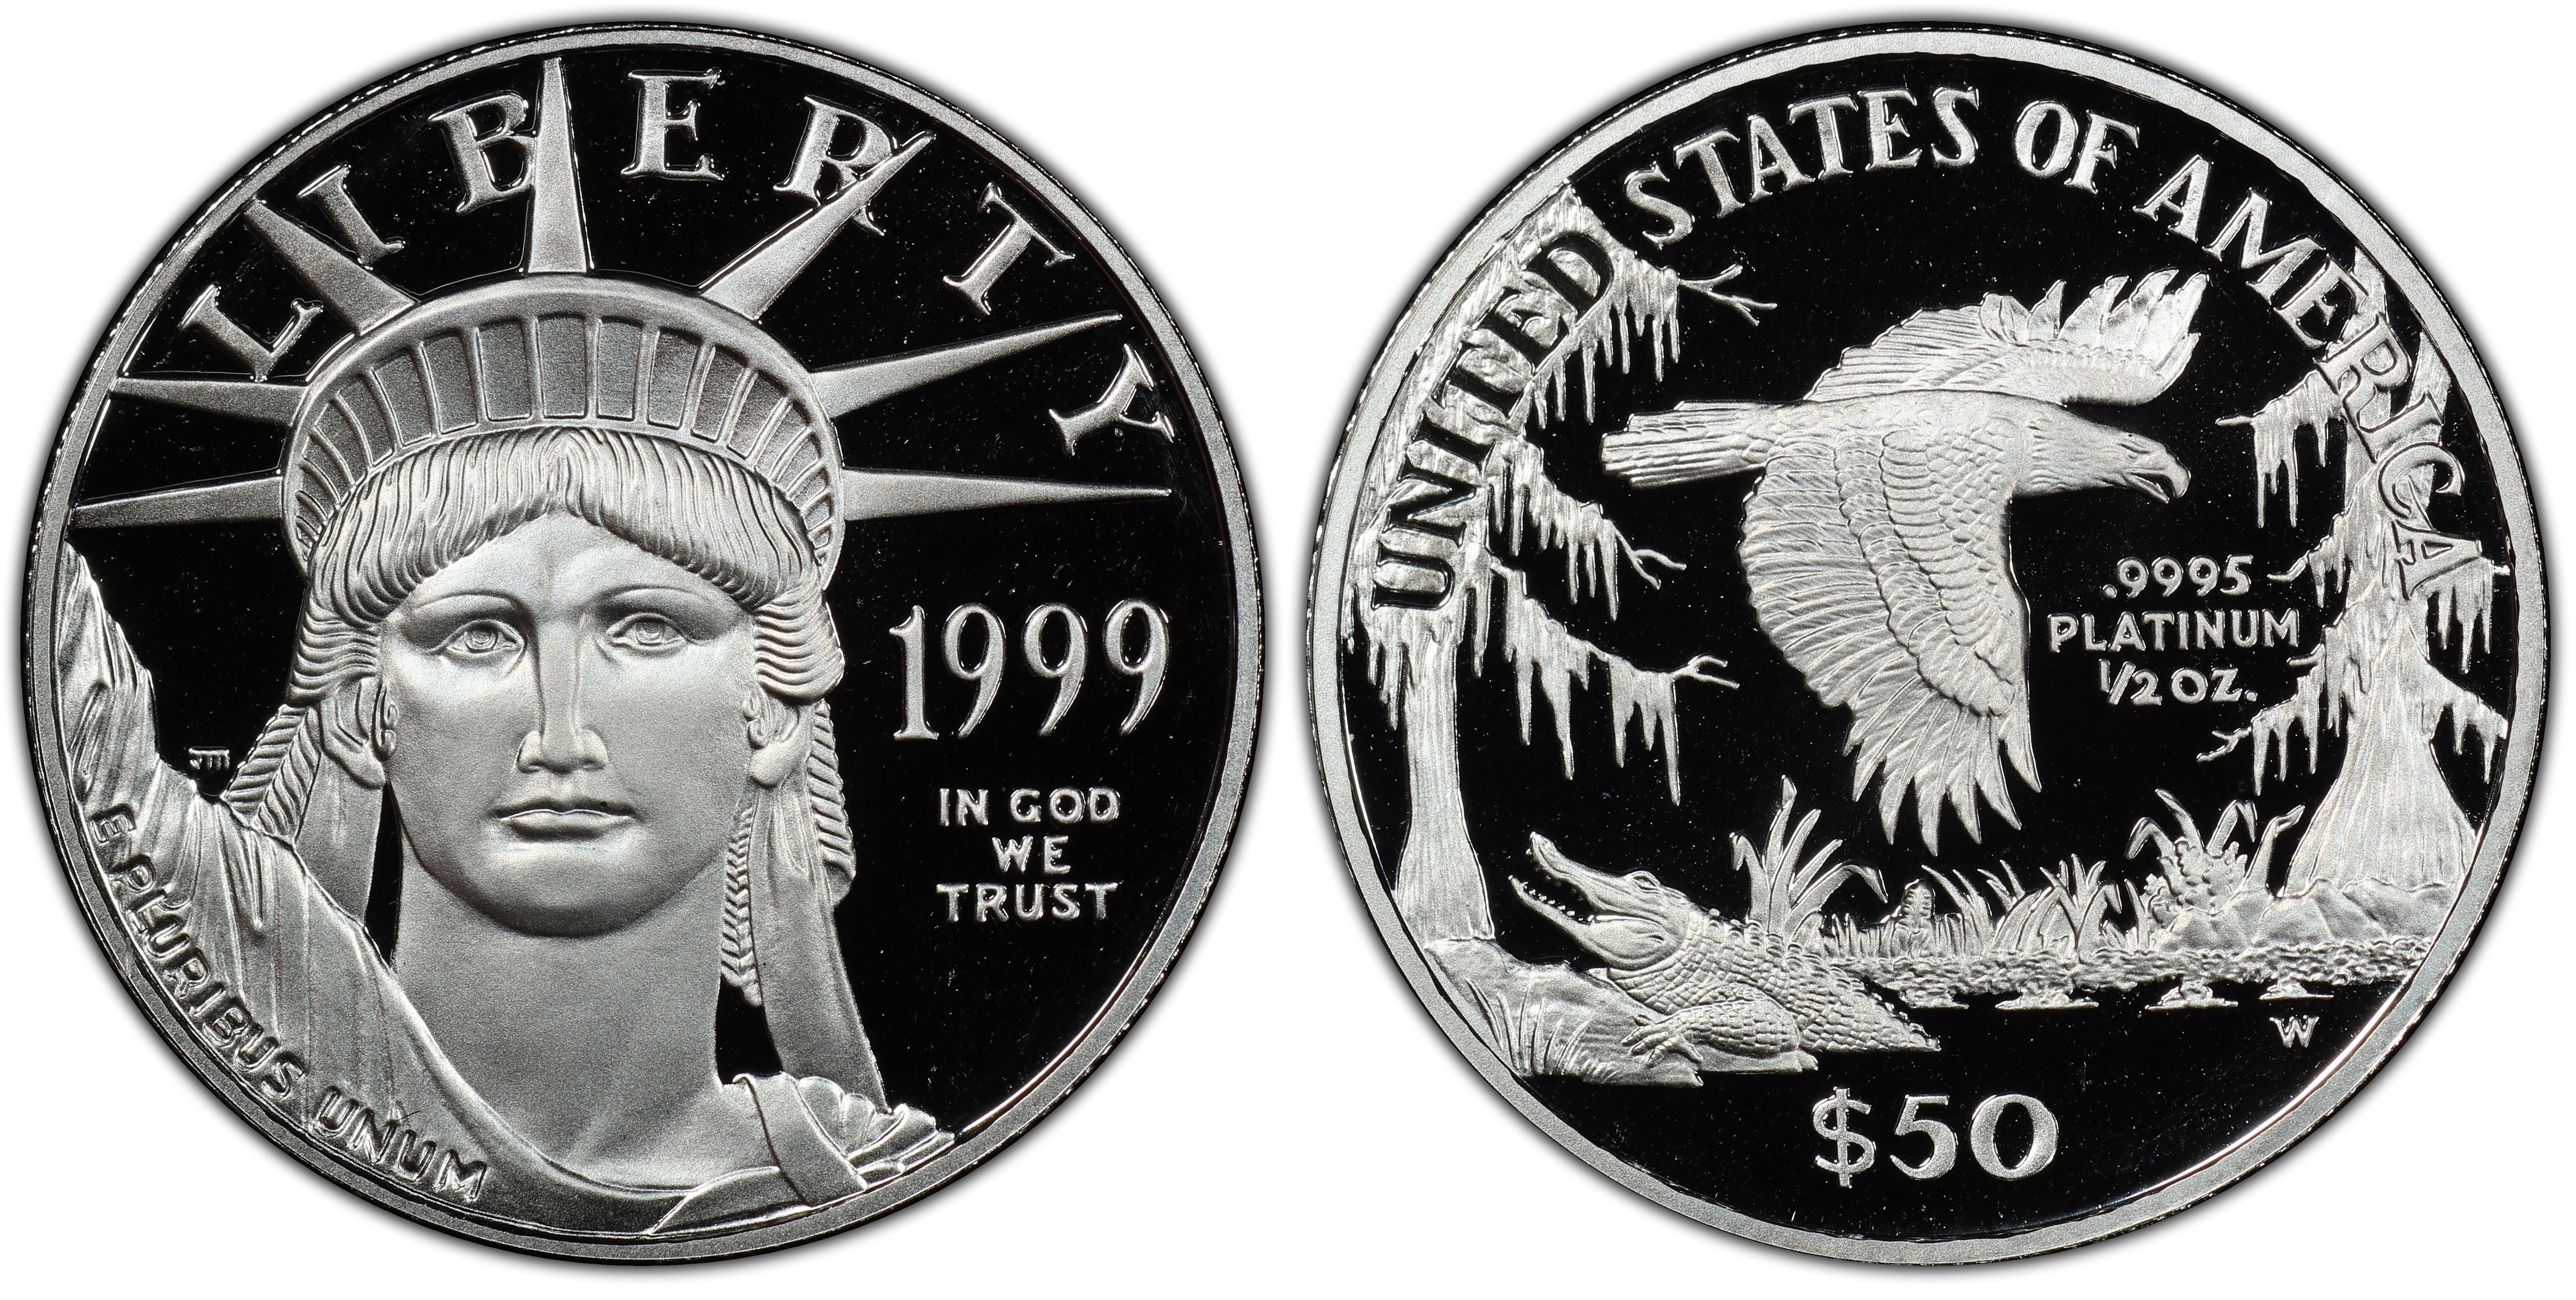 1999-W PCGS PR70 1/2 oz Proof Platinum Eagle $50 